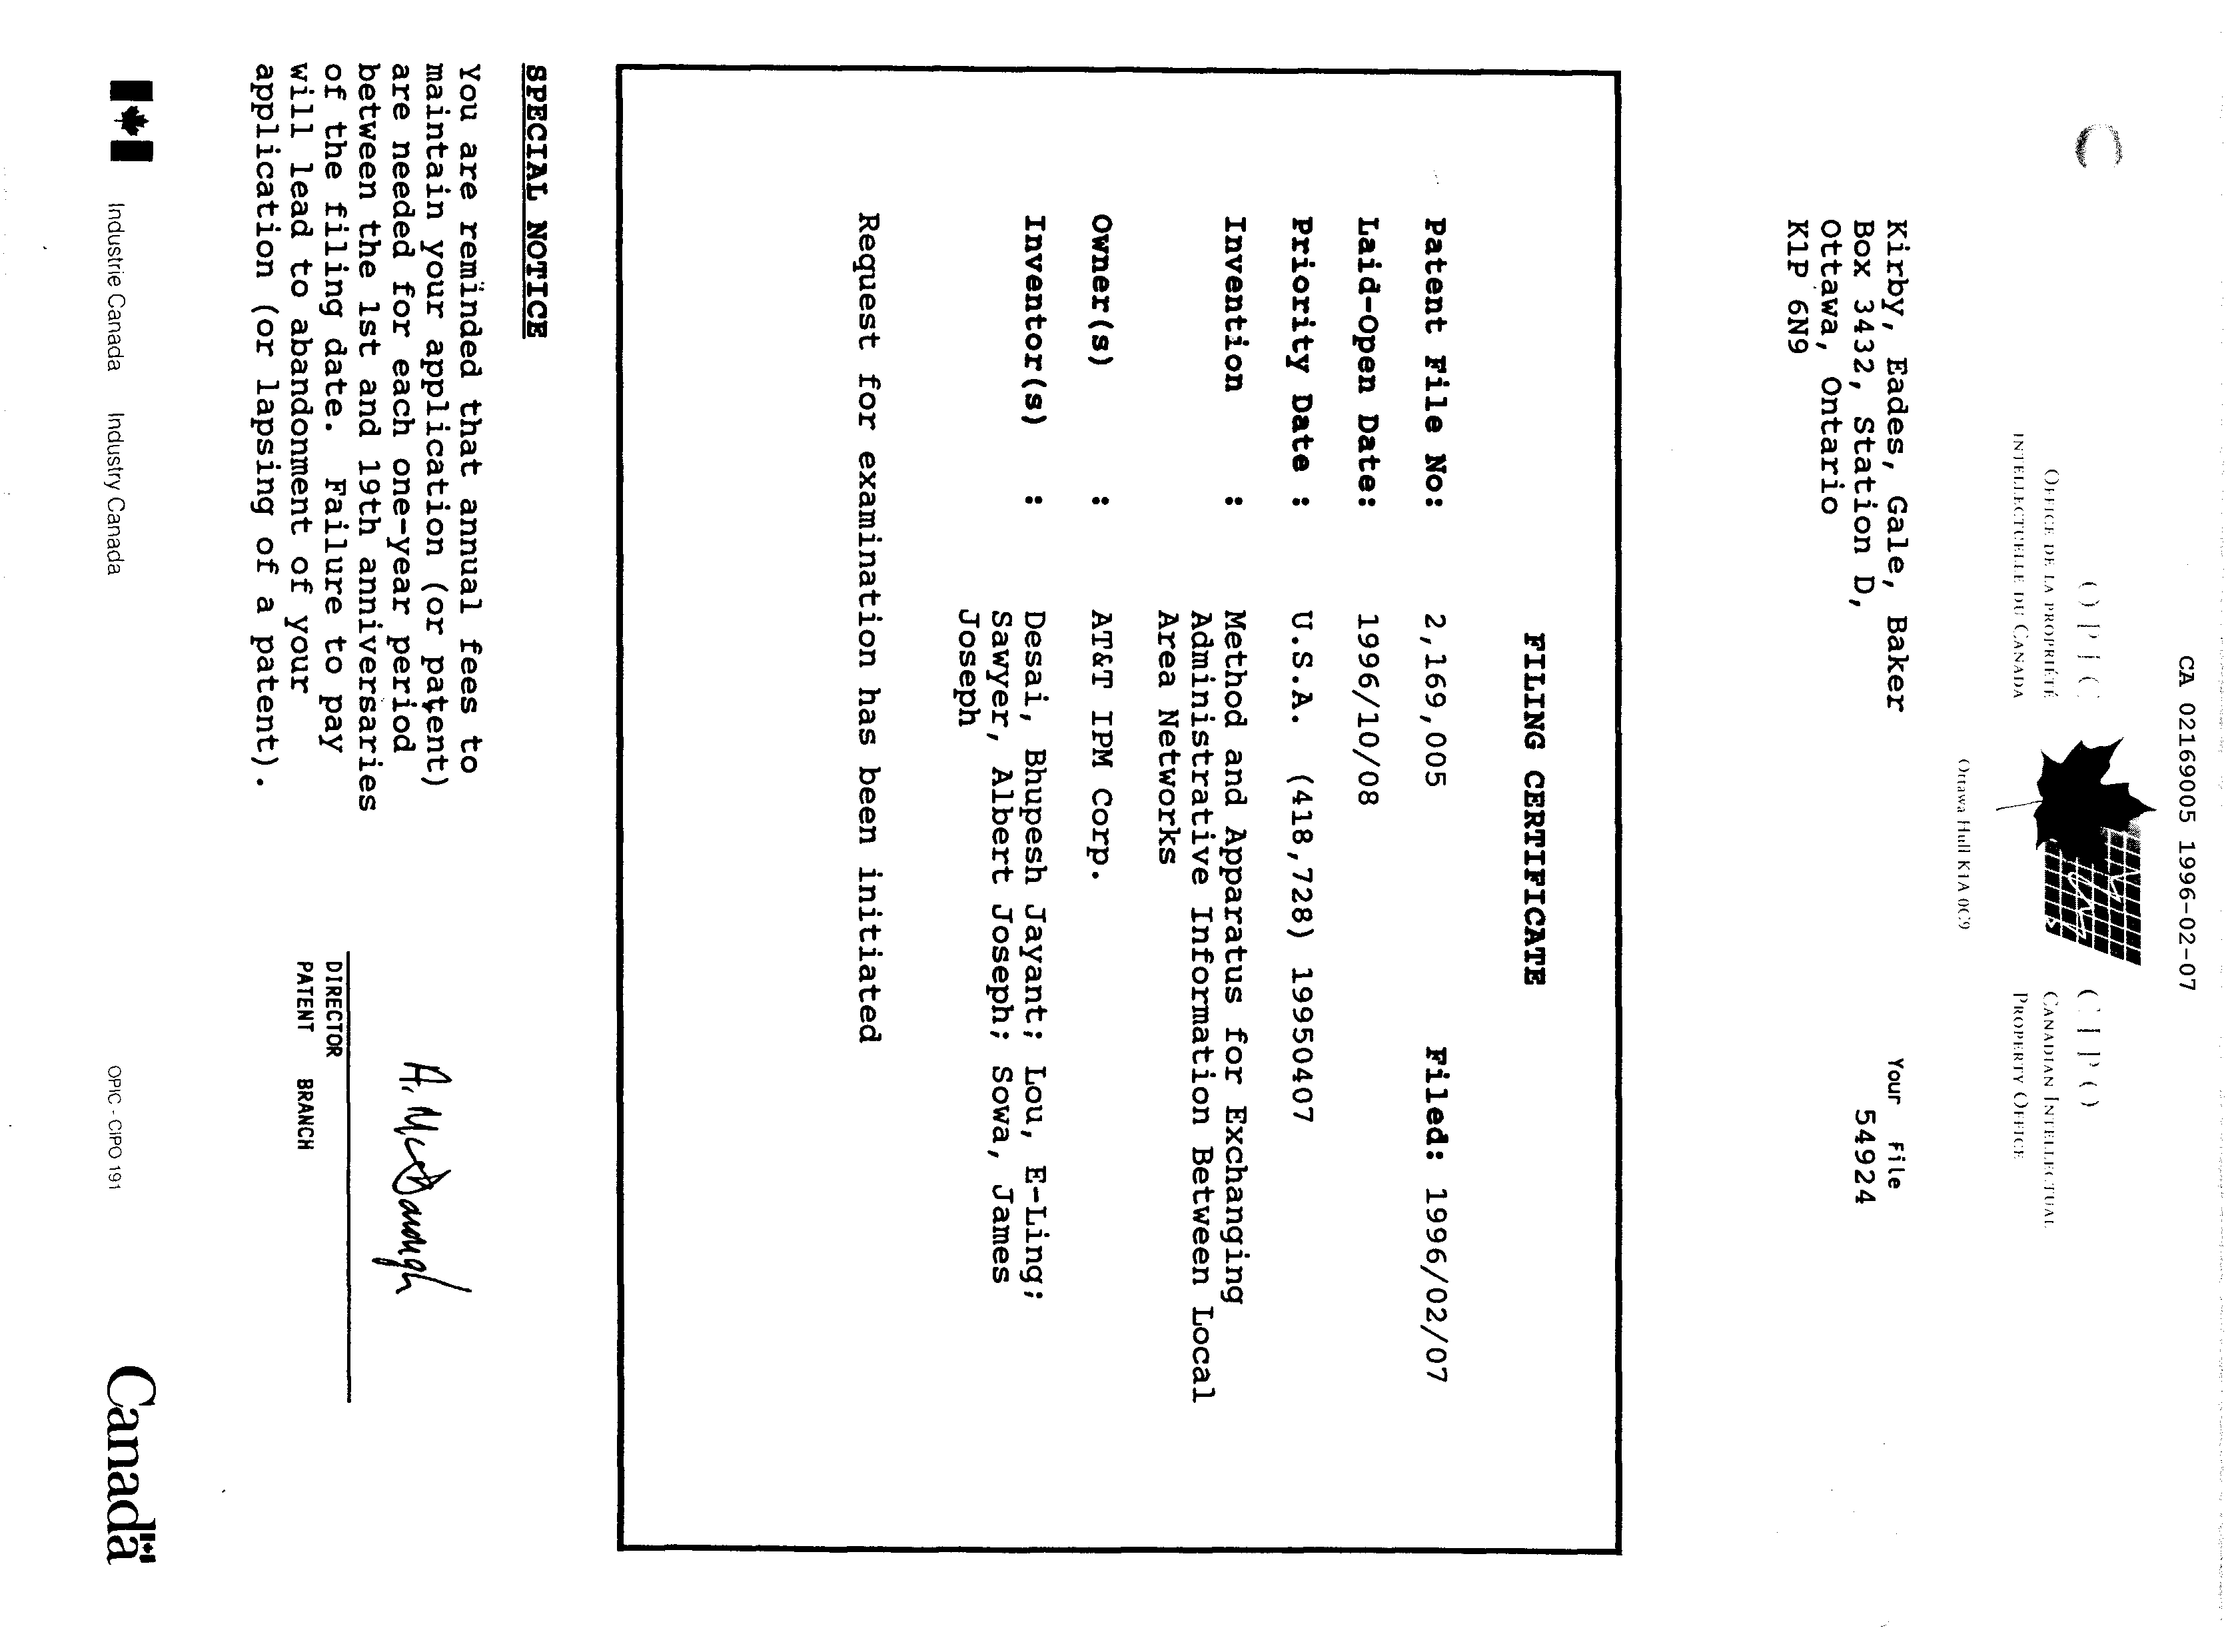 Canadian Patent Document 2169005. Correspondence 19951207. Image 1 of 1